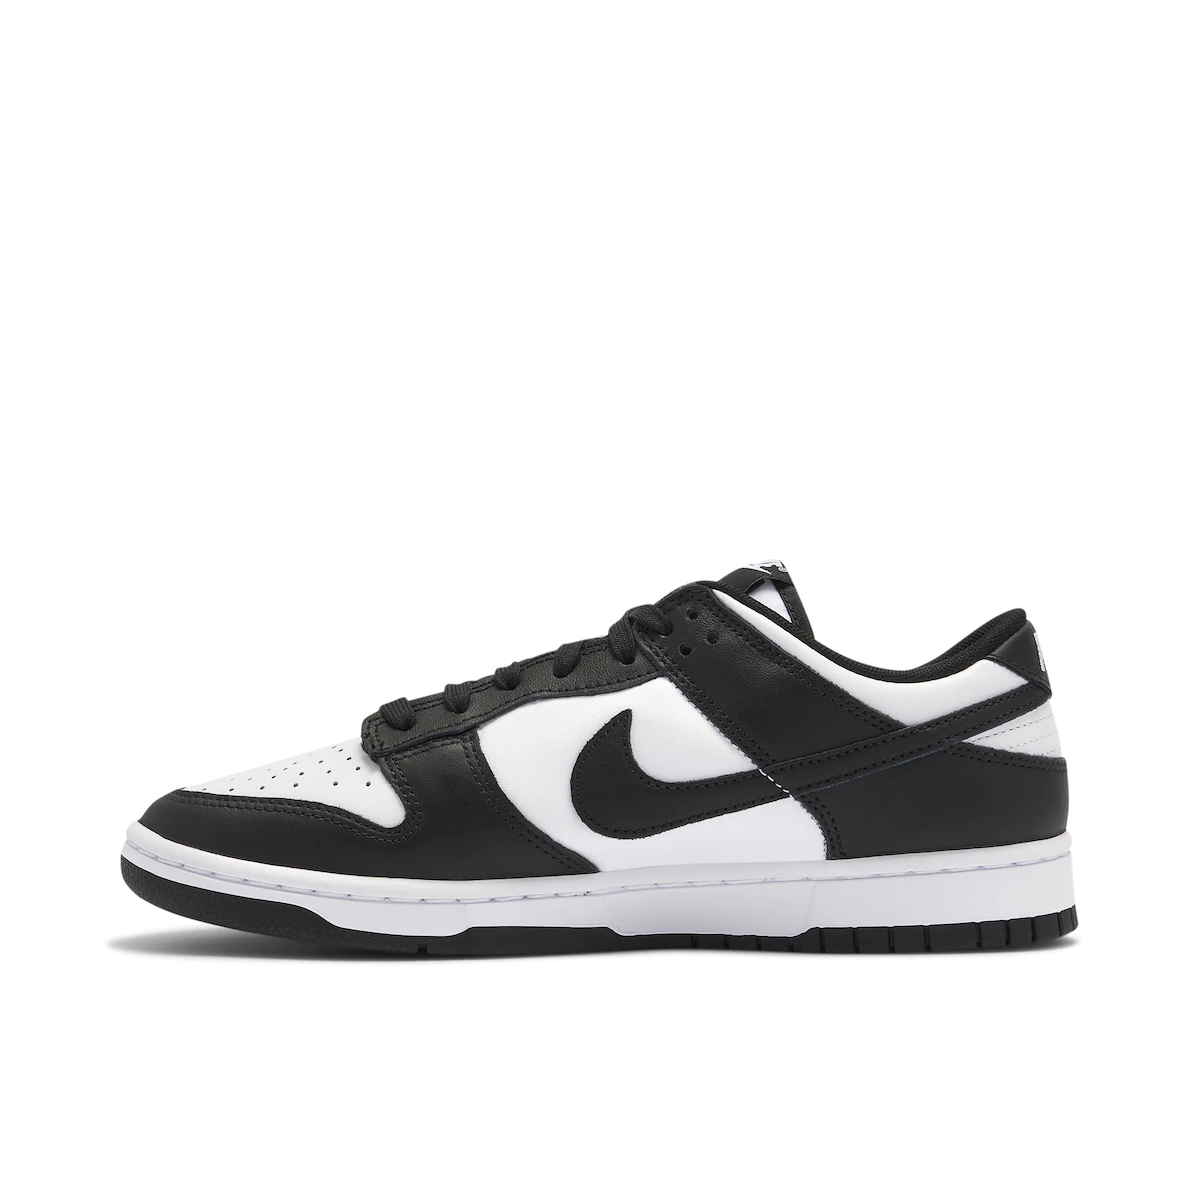 Nike Dunk Low Black White Panda